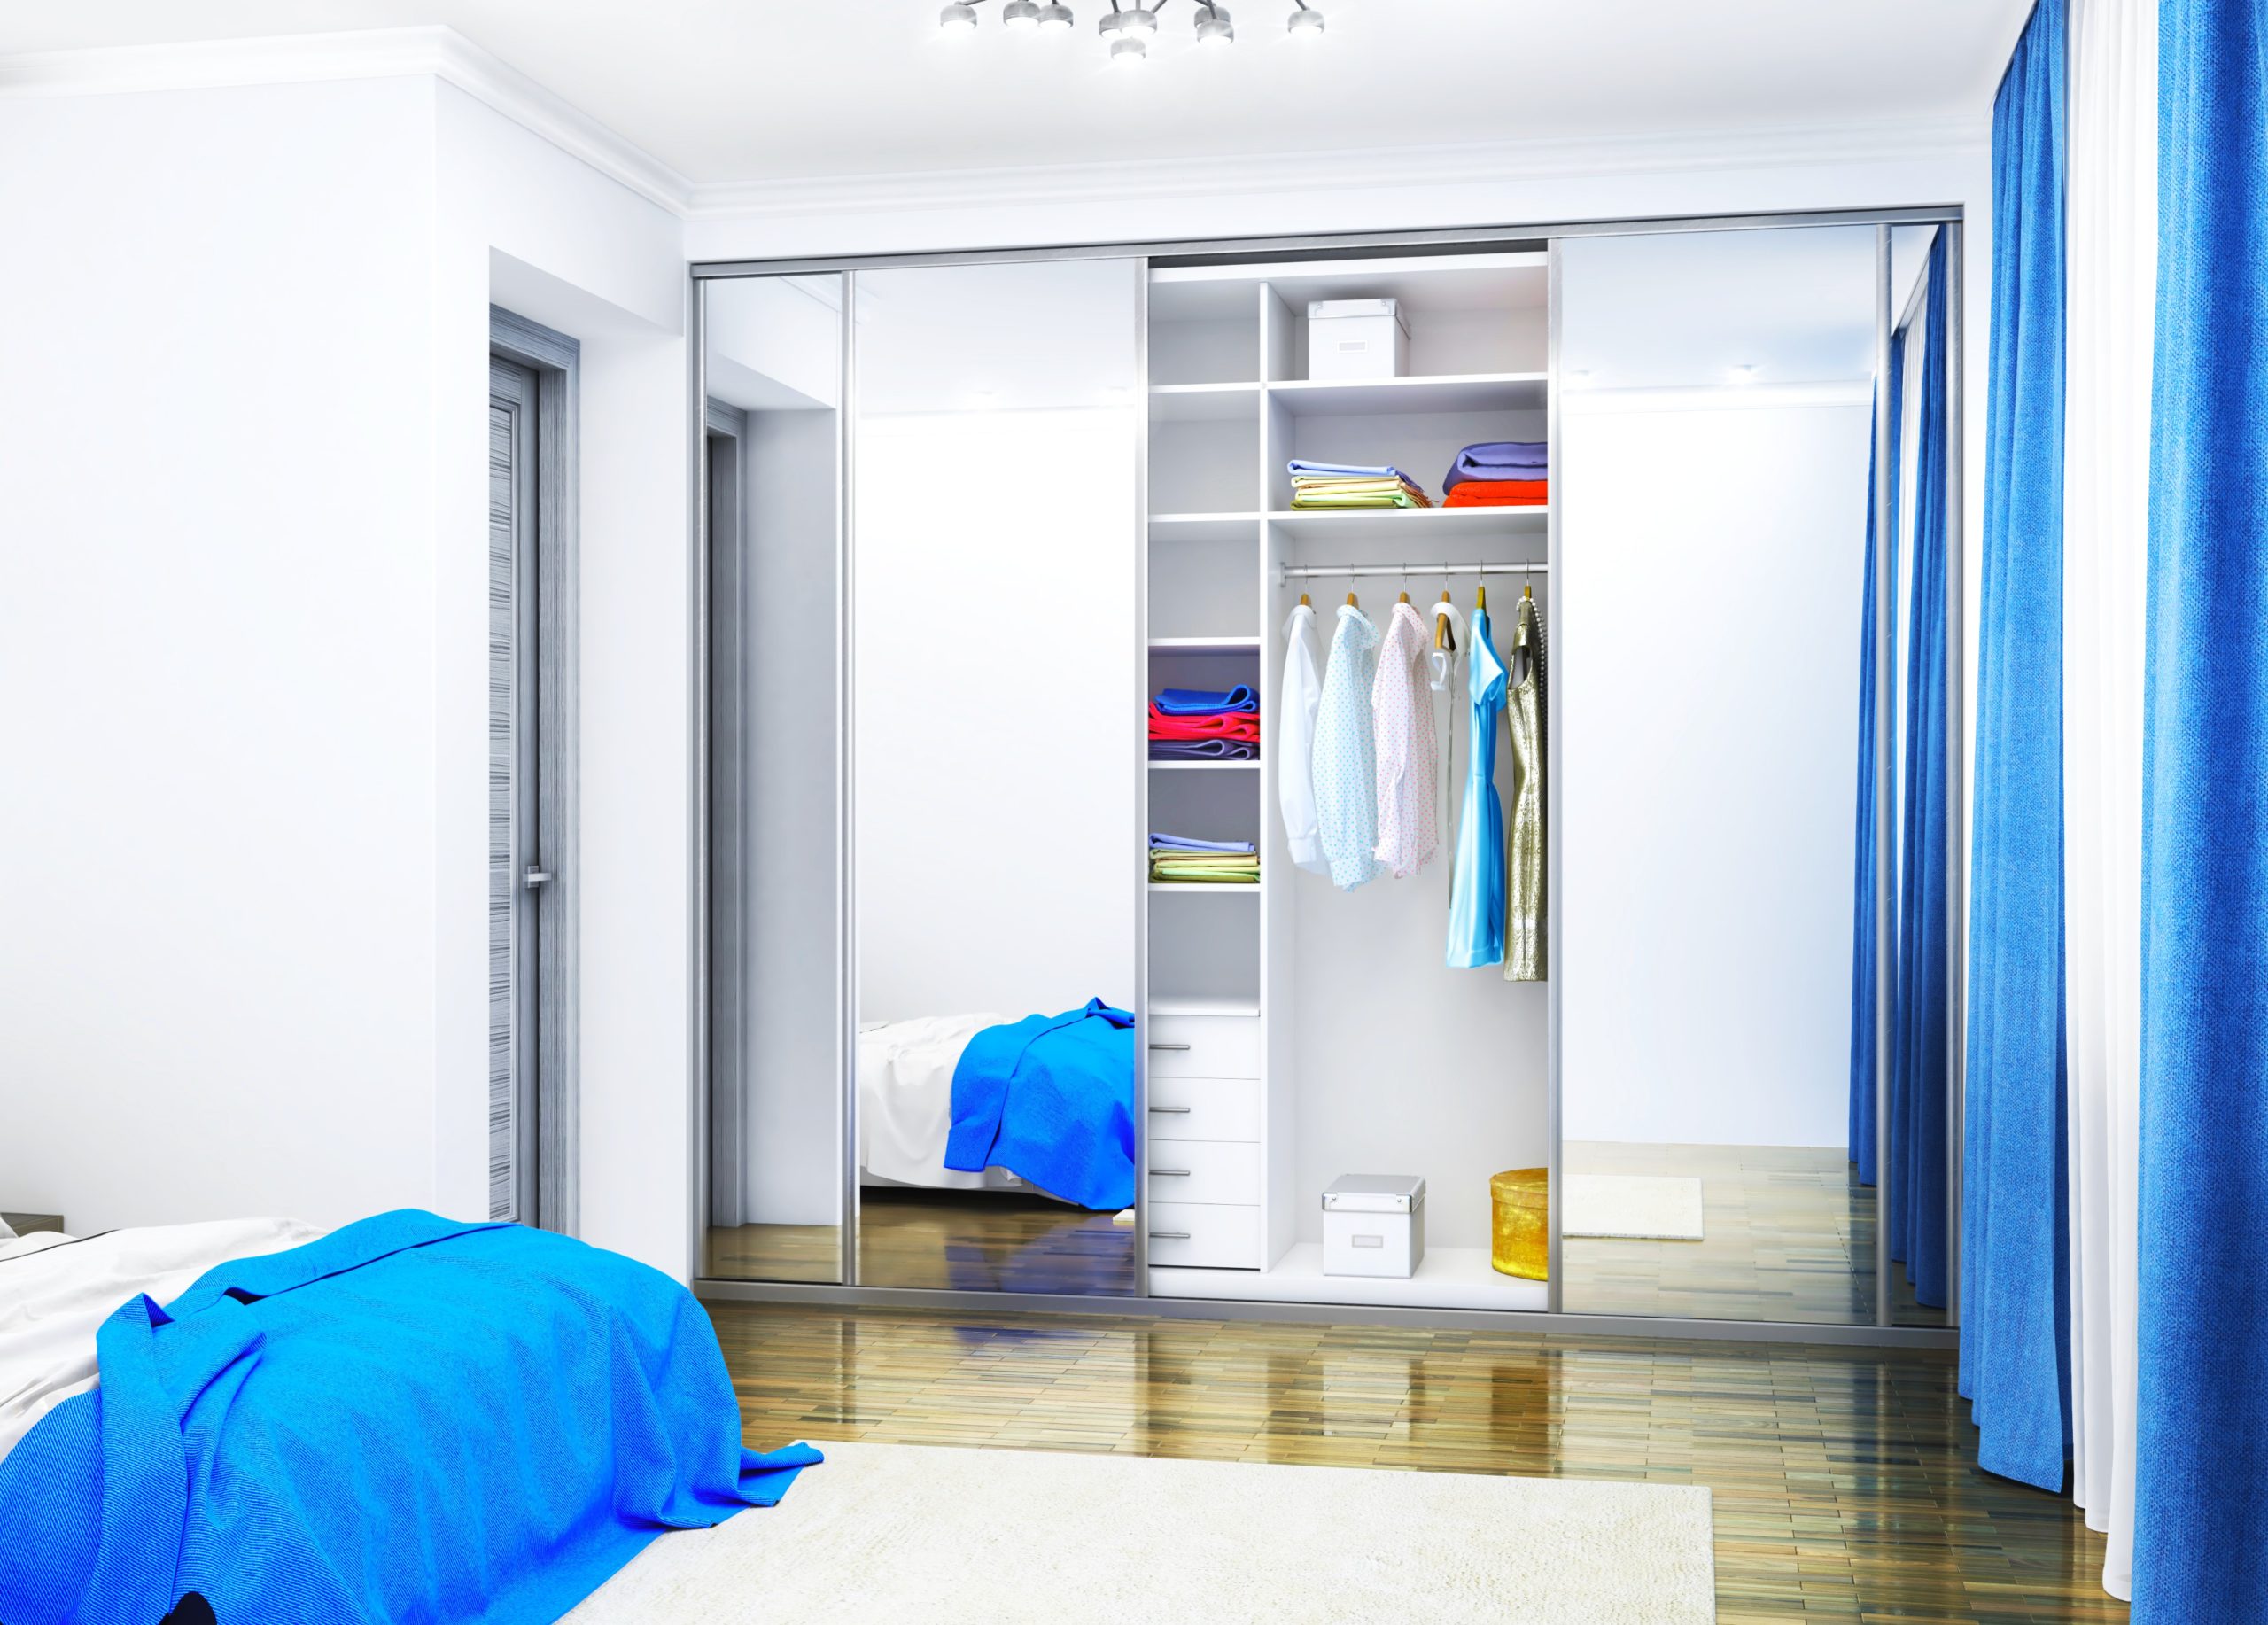 <img src="mirrored.jpg" alt="mirrored wardrobe in loft bedroom"/> 